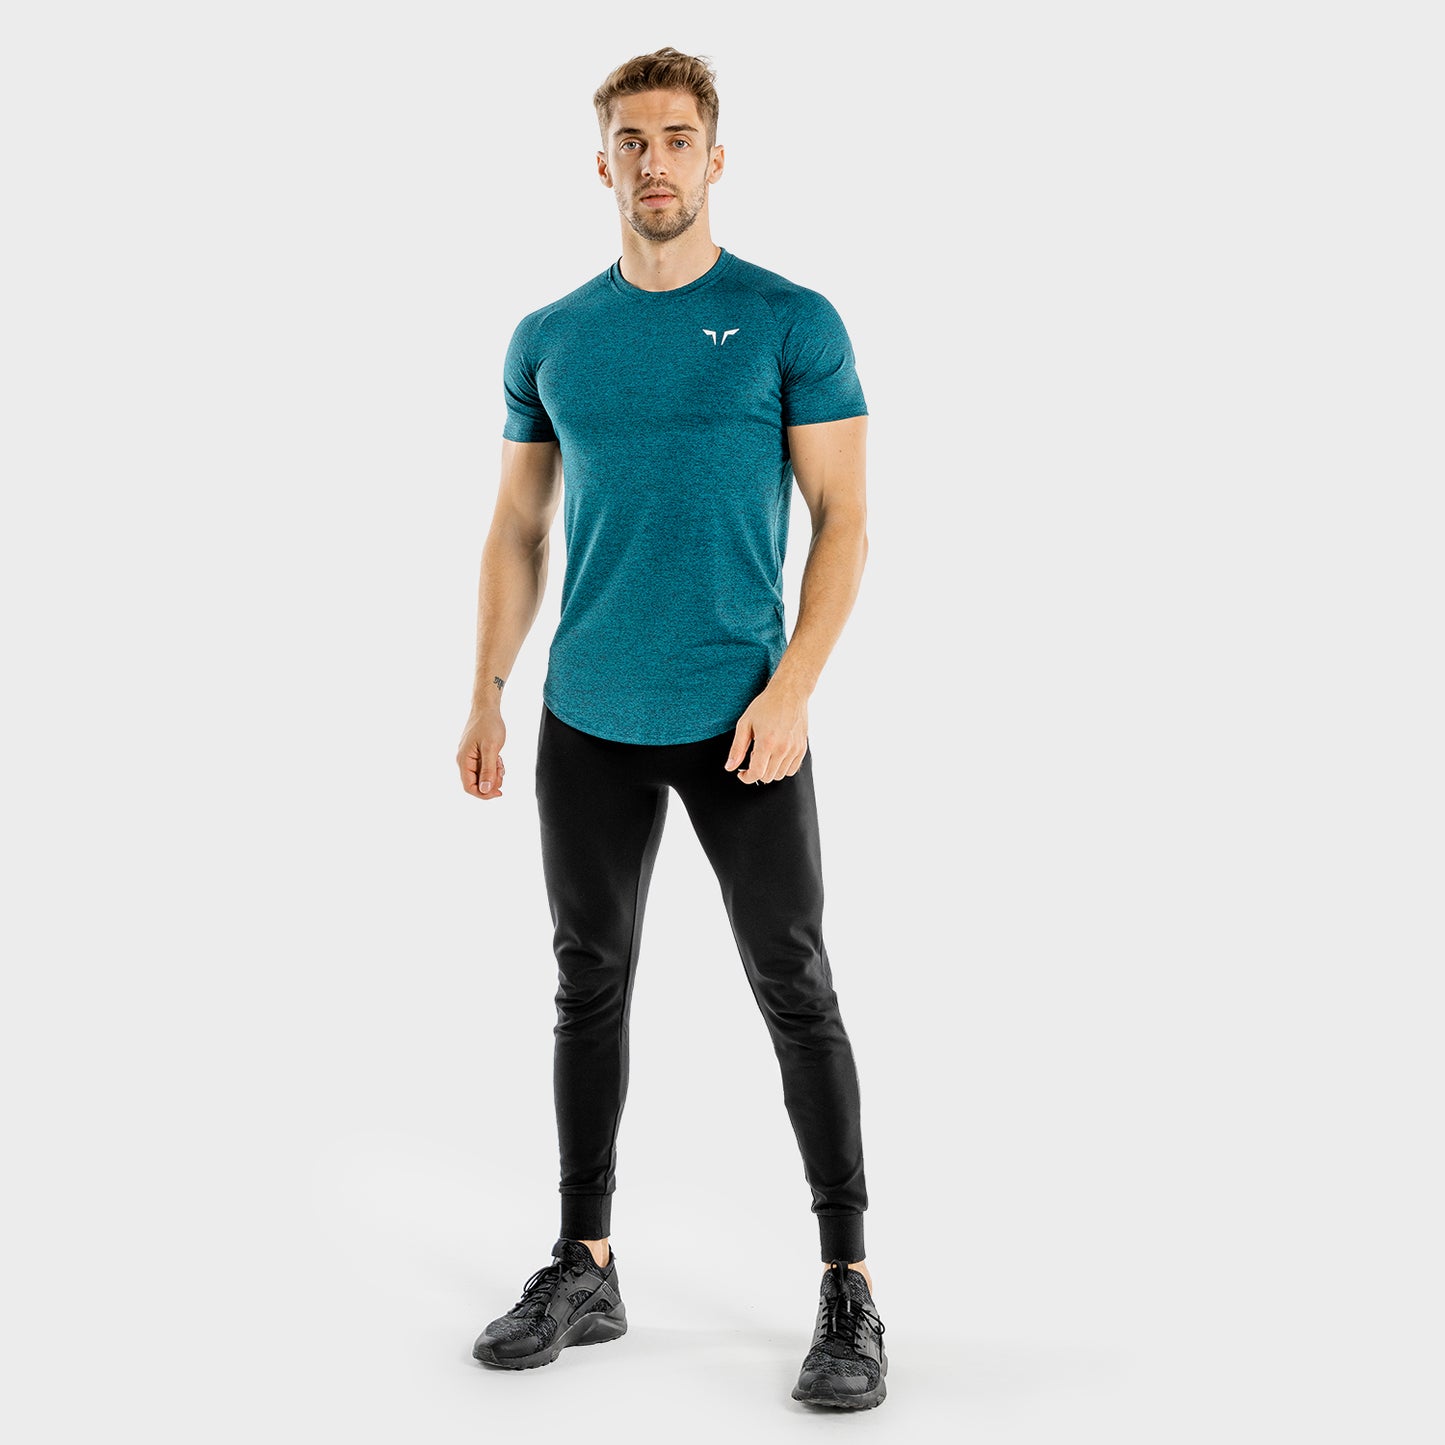 squatwolf-workout-shirts-for-men-melange-workout-tee-teal-gym-wear